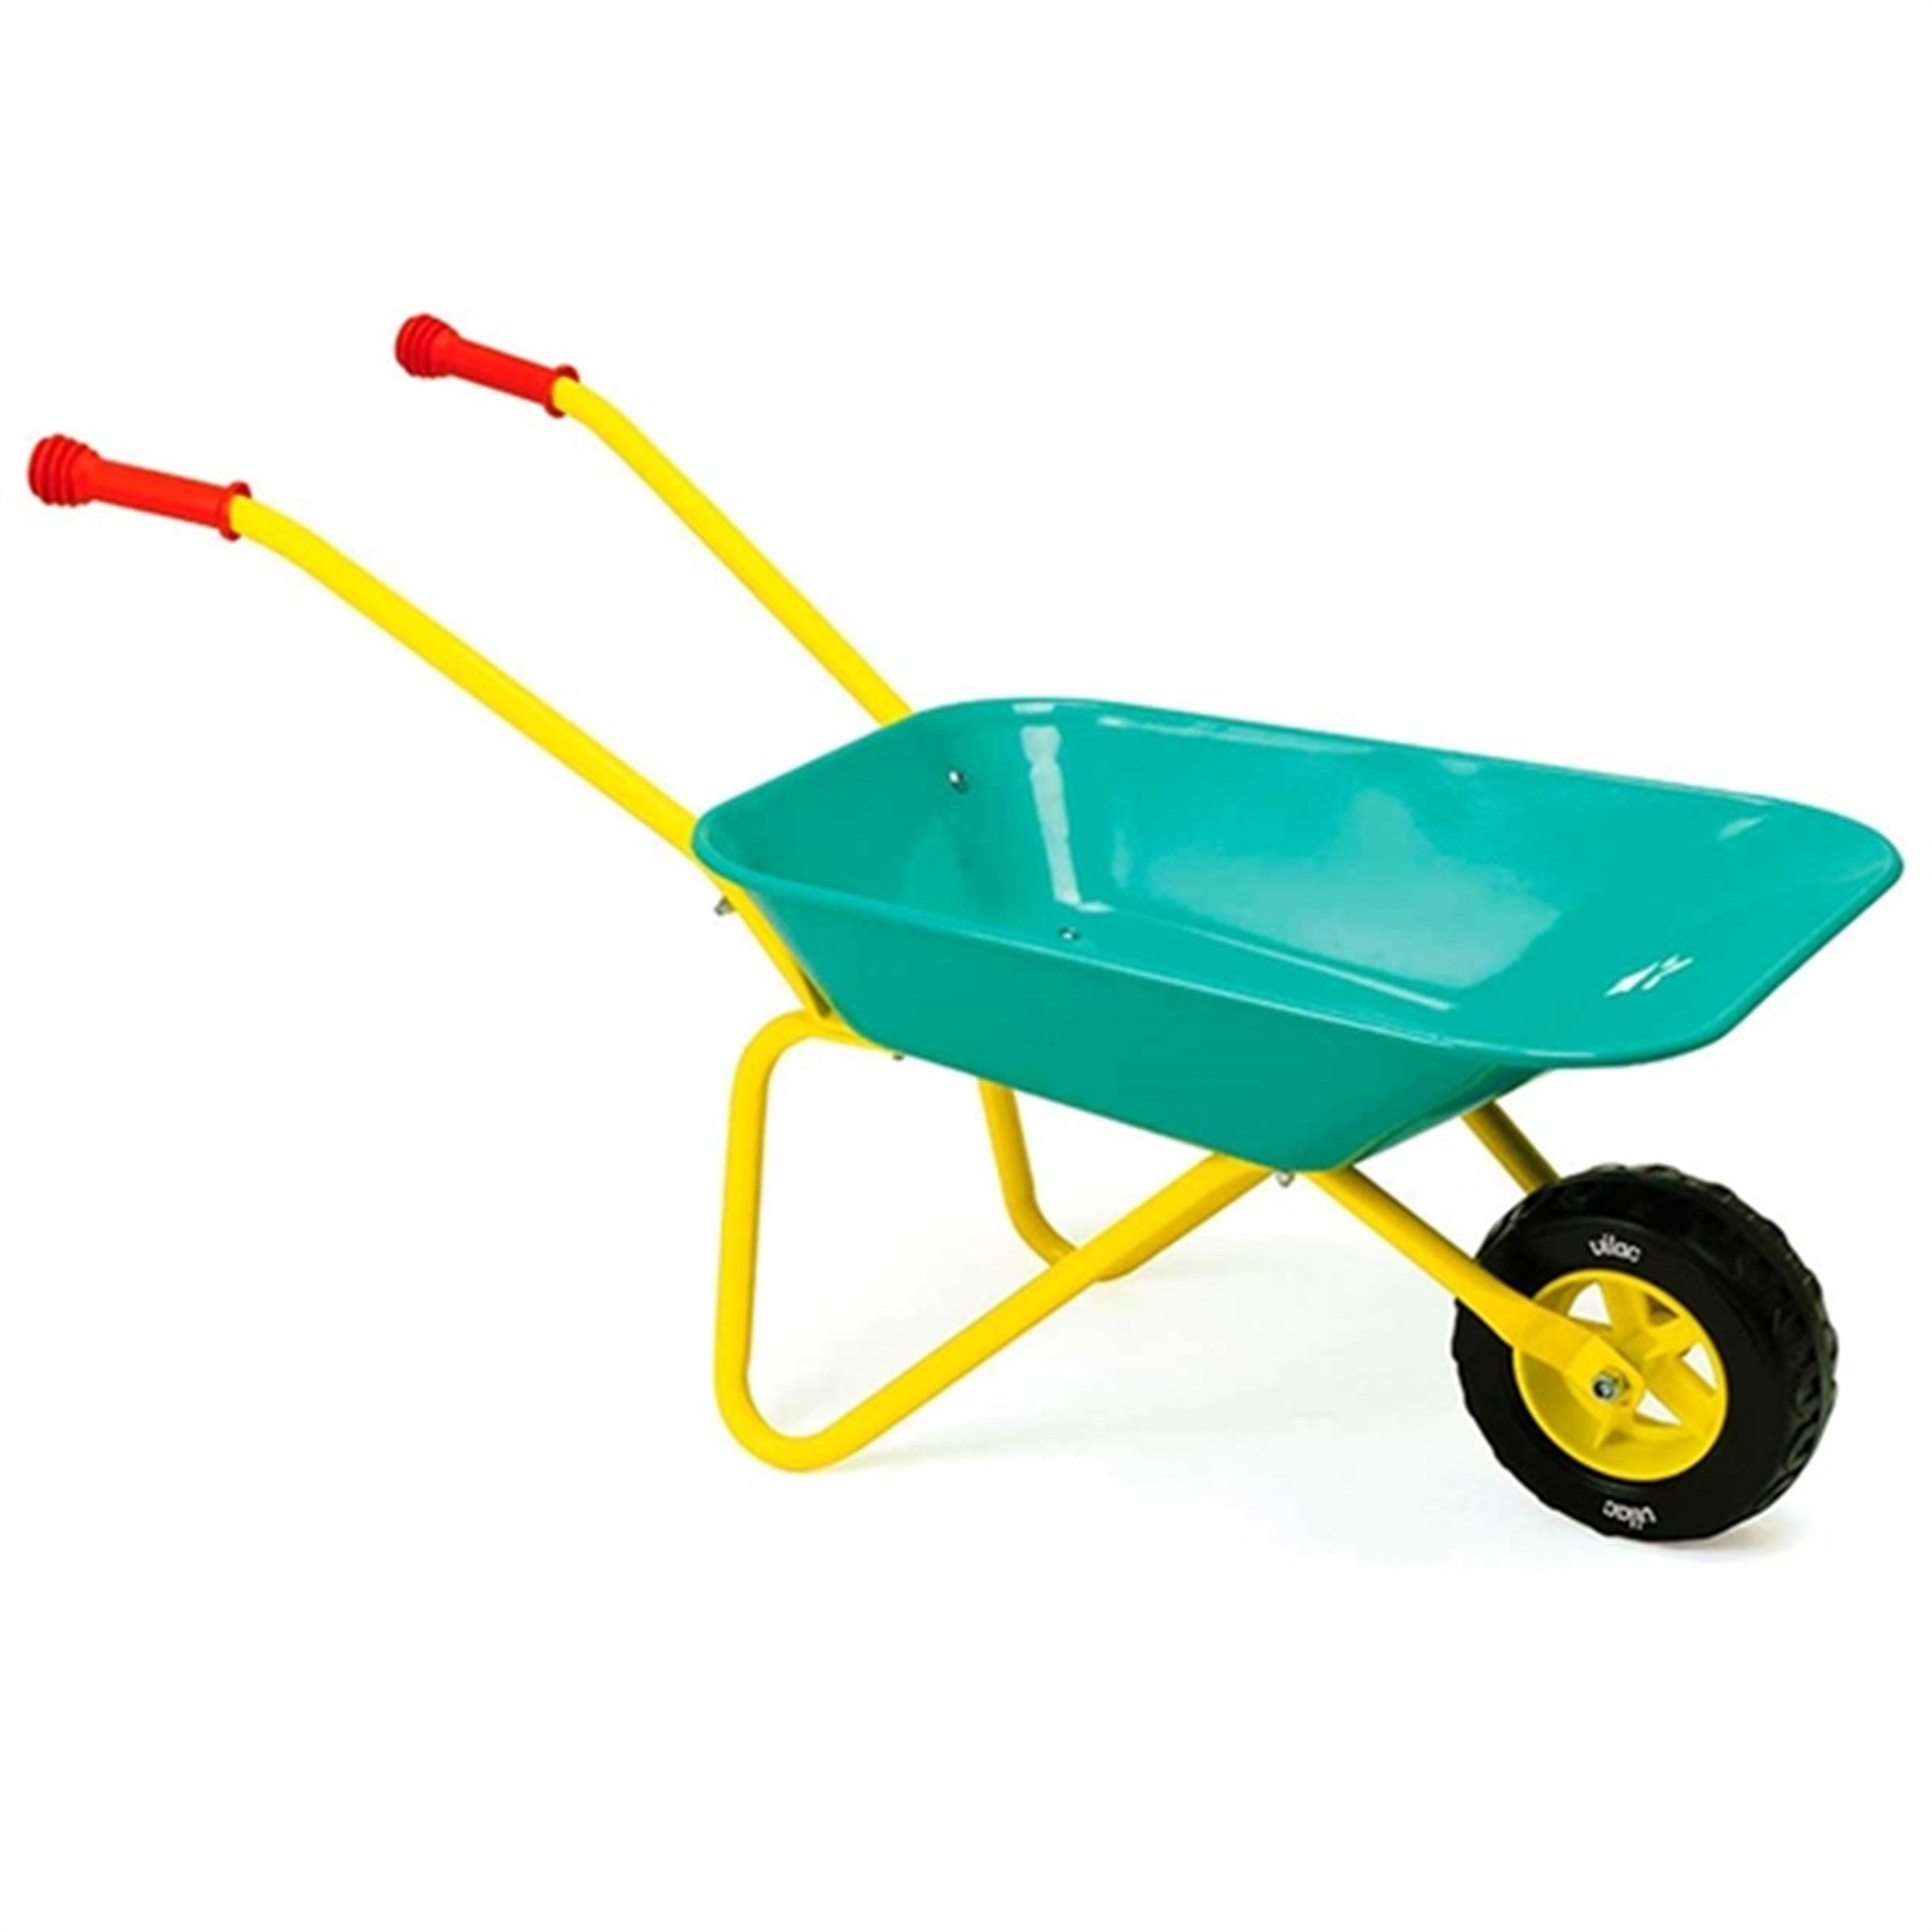 Vilac Wheelbarrow For Children 2